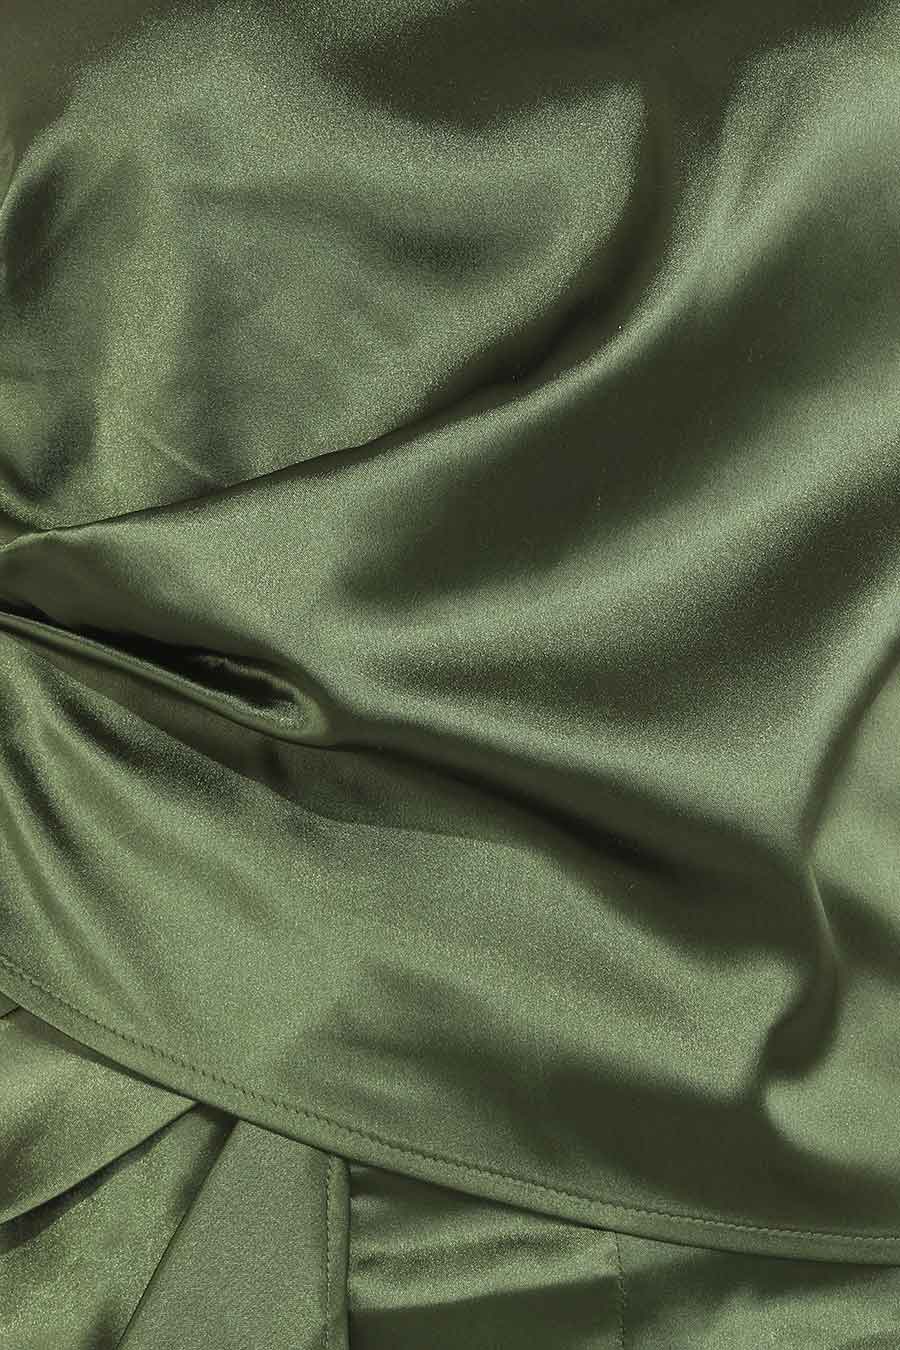 Green Pleated Wrap Skirt